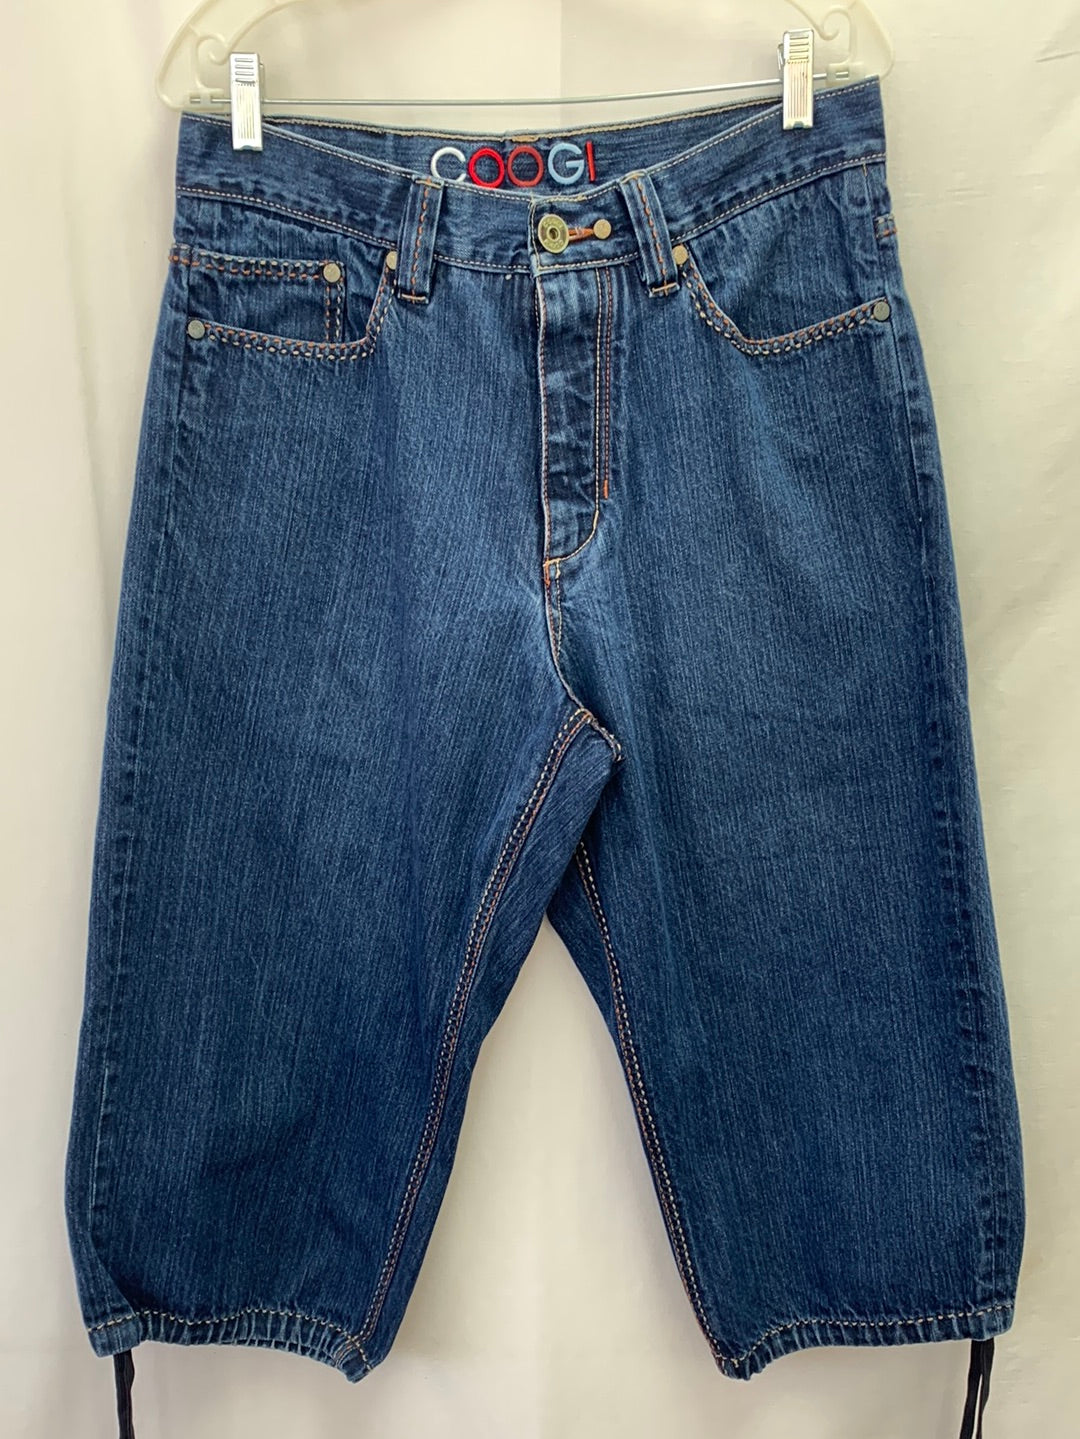 COOGI Denim Embroidered Pocket Short Pants / Long Shorts - 34x22